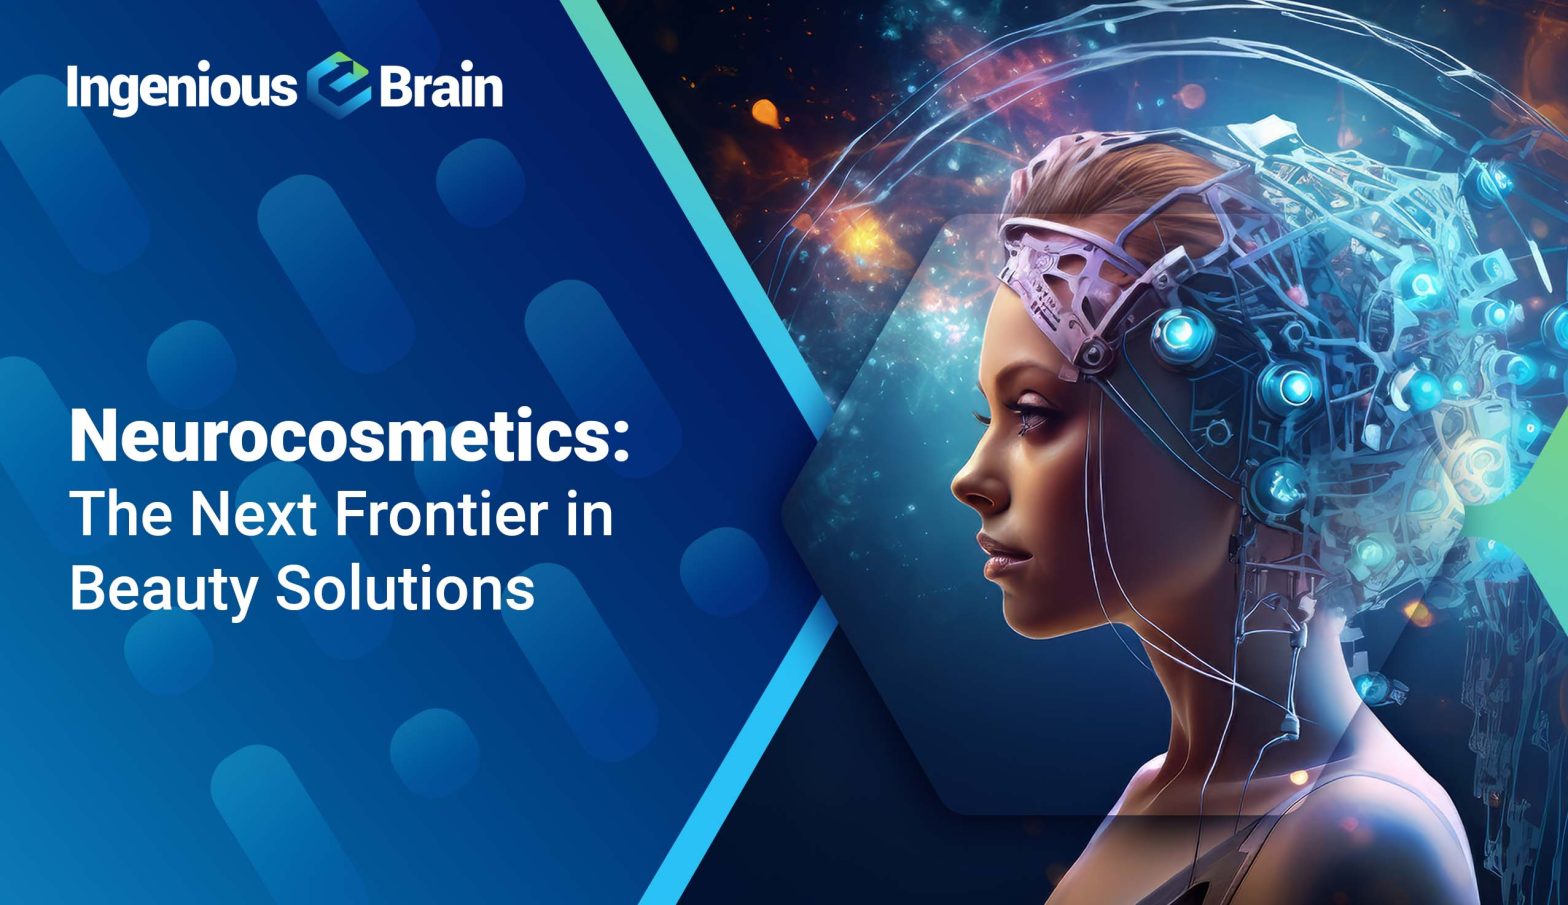 Neurocosmetics: The next frontier in Beauty Solutions